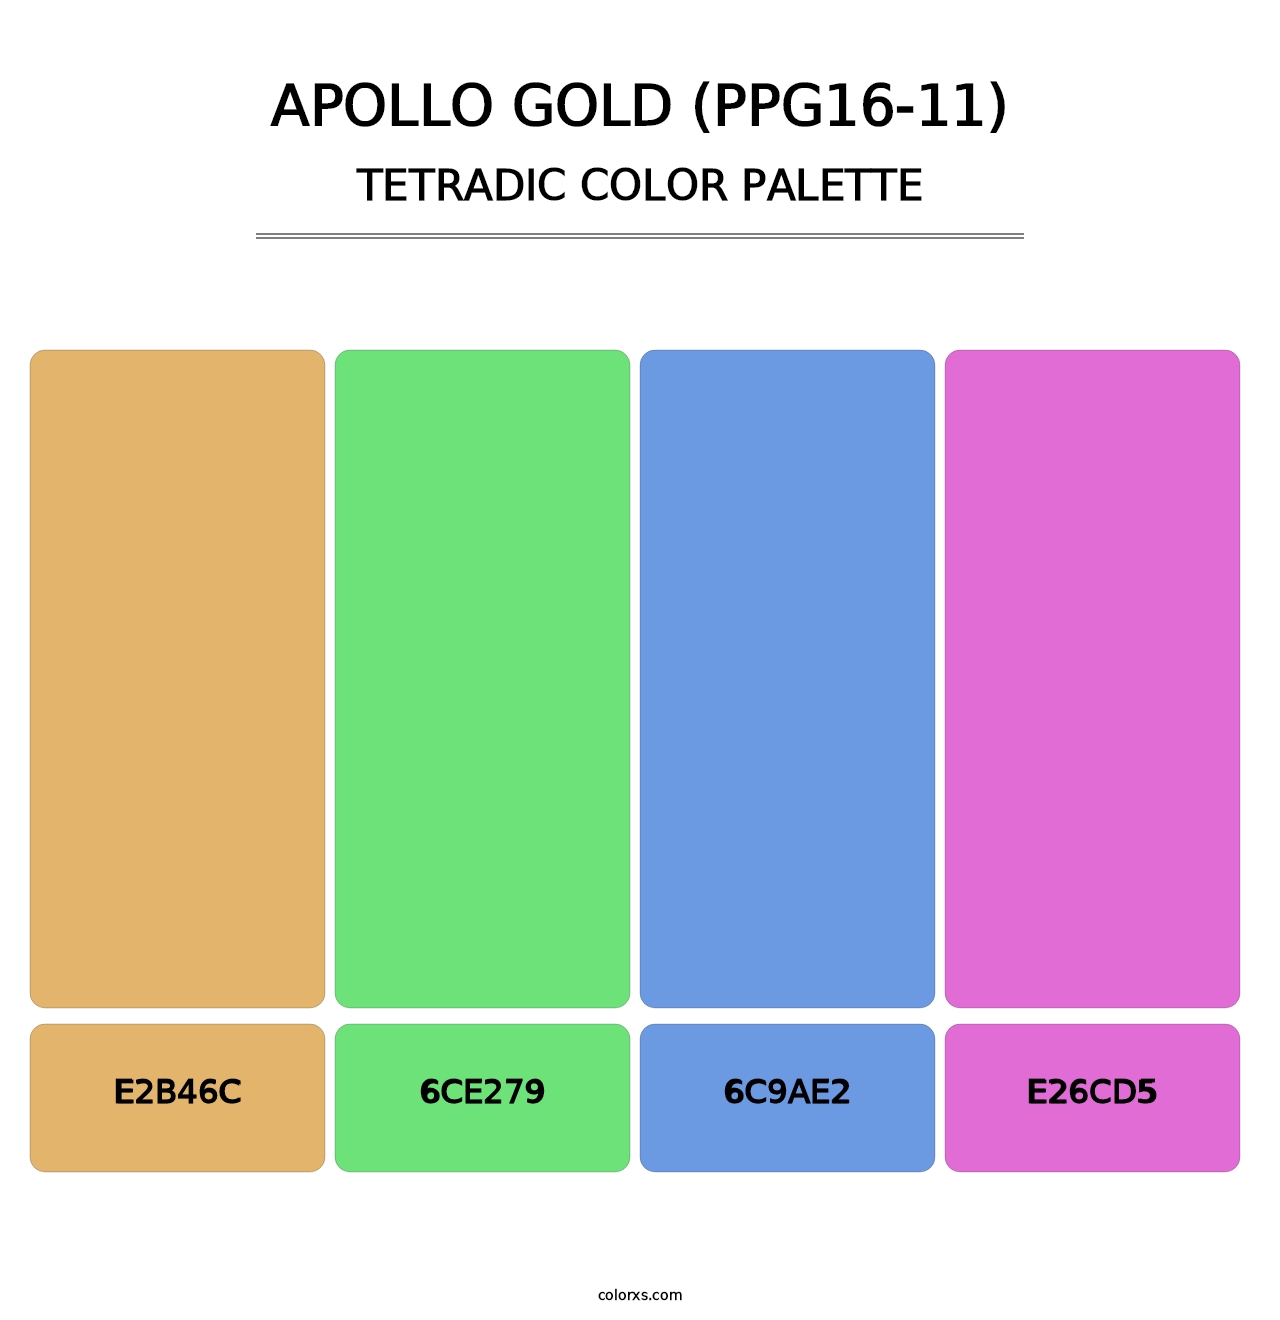 Apollo Gold (PPG16-11) - Tetradic Color Palette